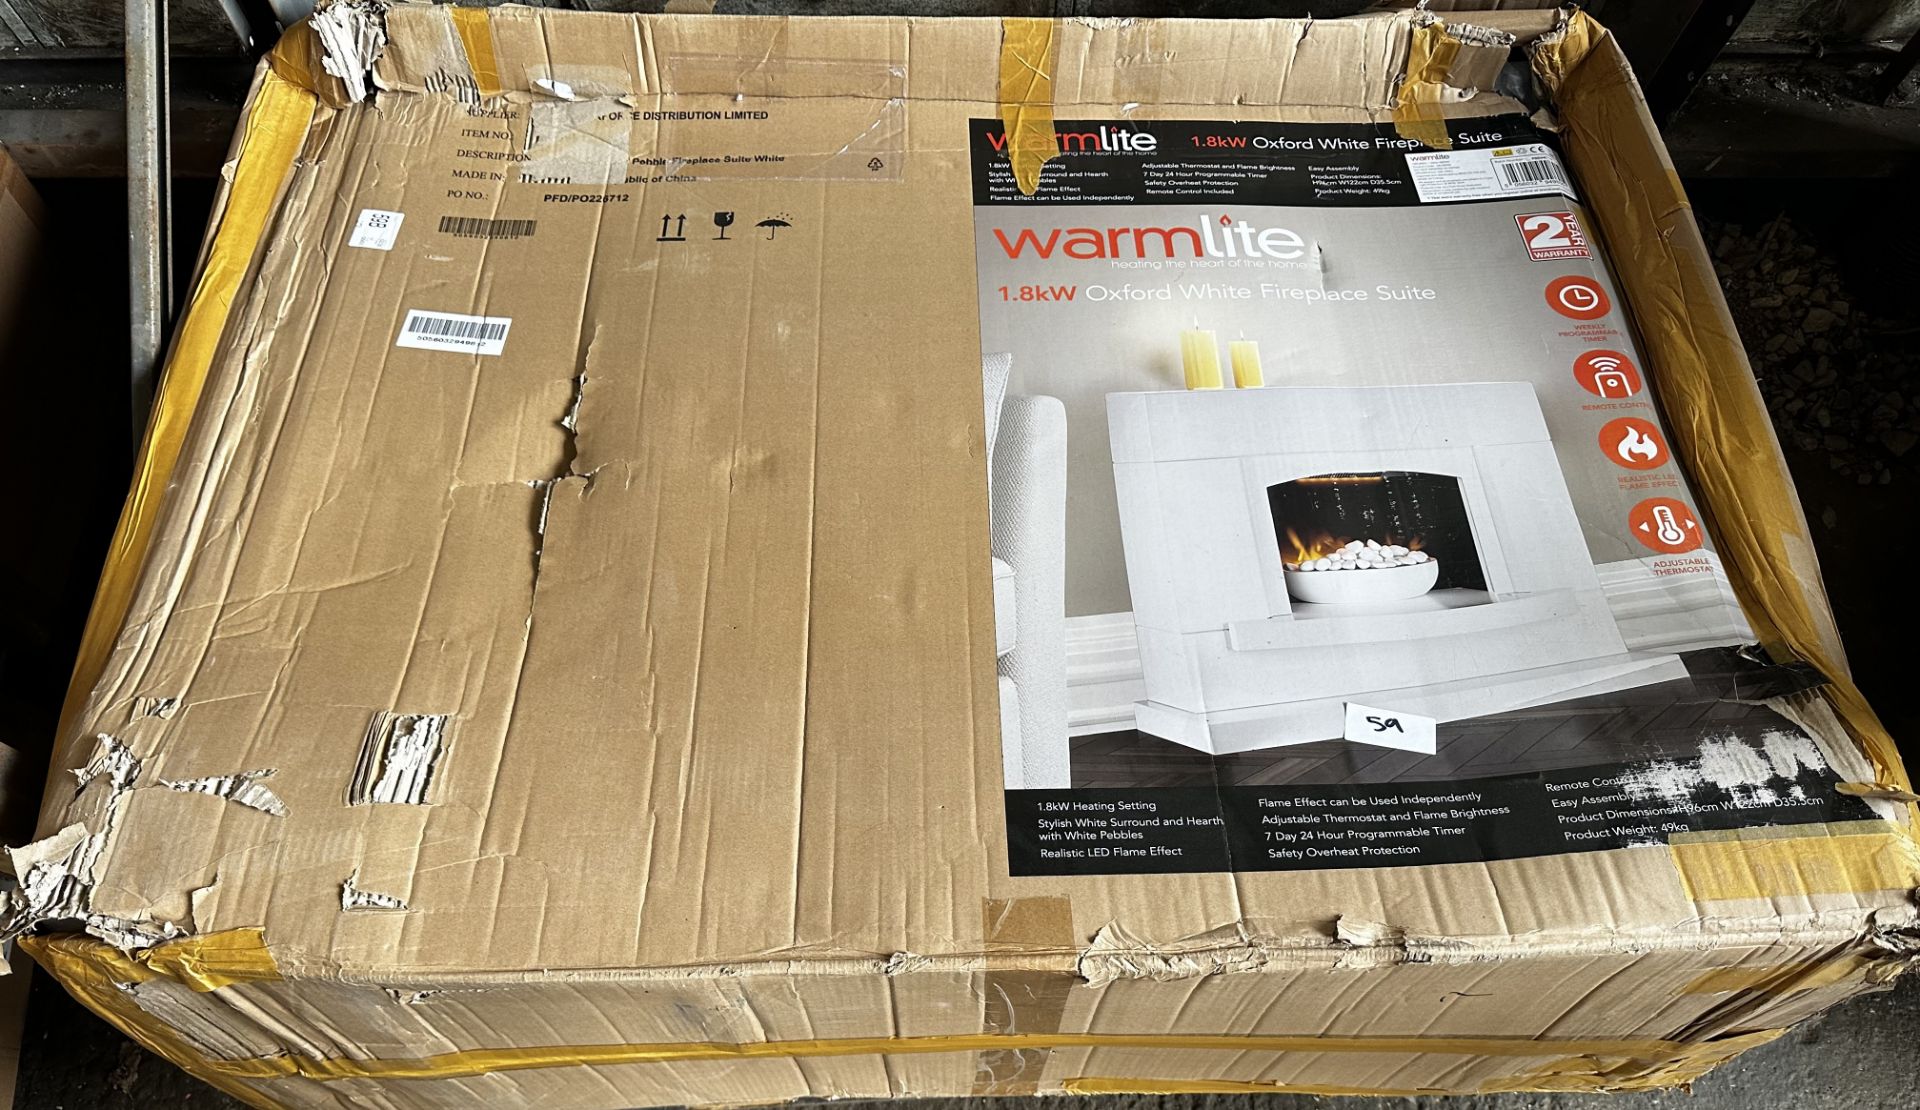 Warmlite 1.8Kw Oxford White Fireplace Suite. RRP £200 - Grade U